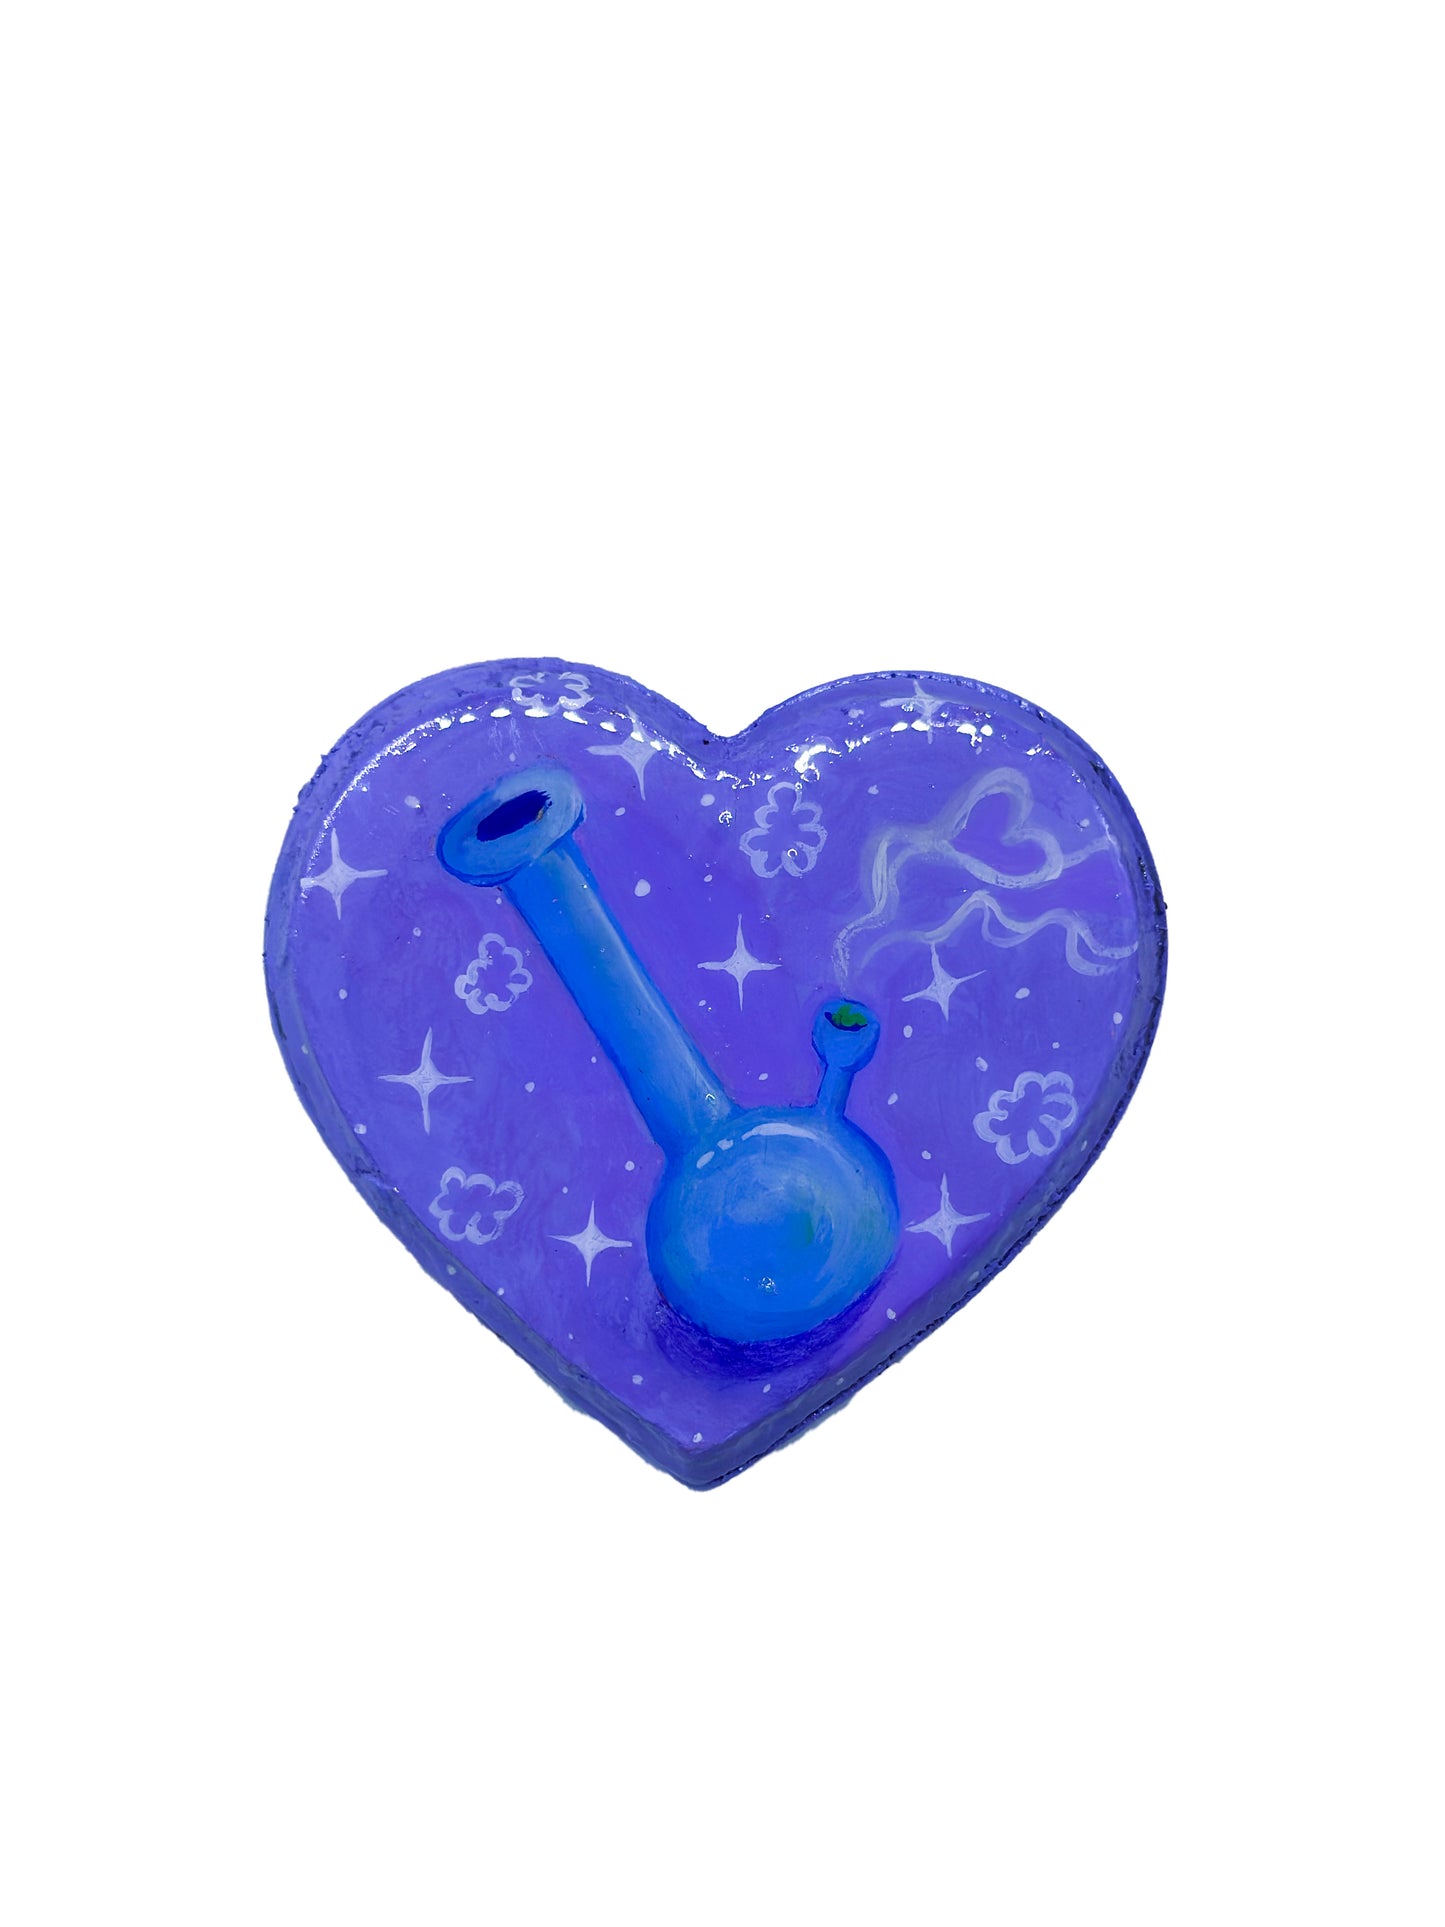 Blue Bong Heart Painting